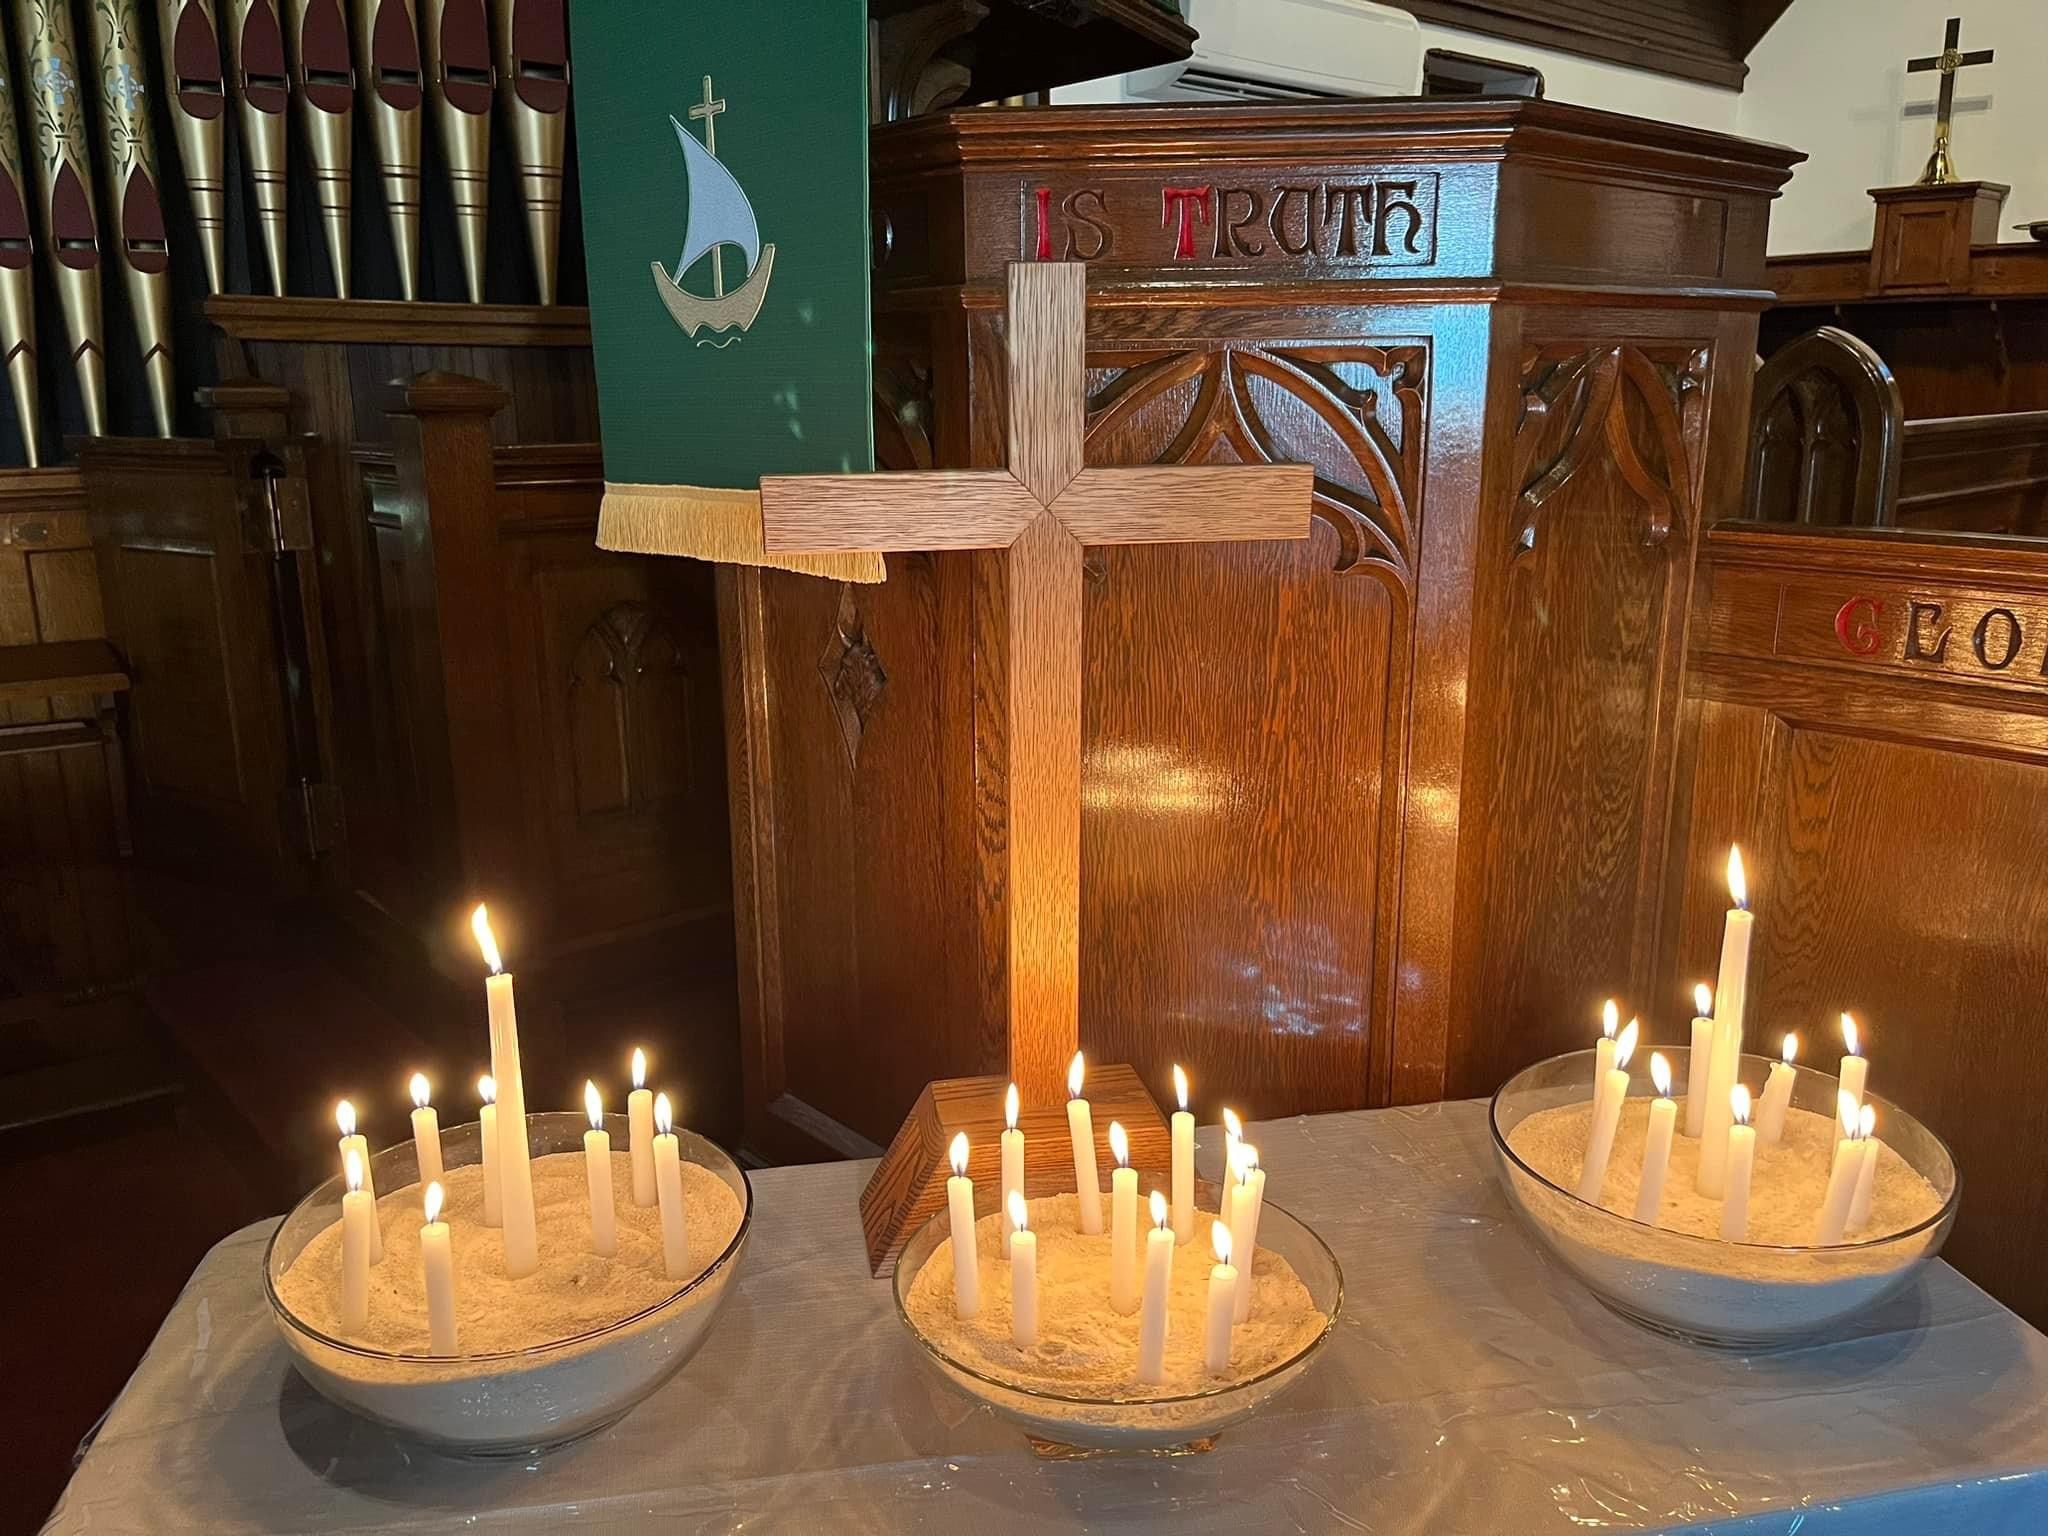 lit candles during Taize worship